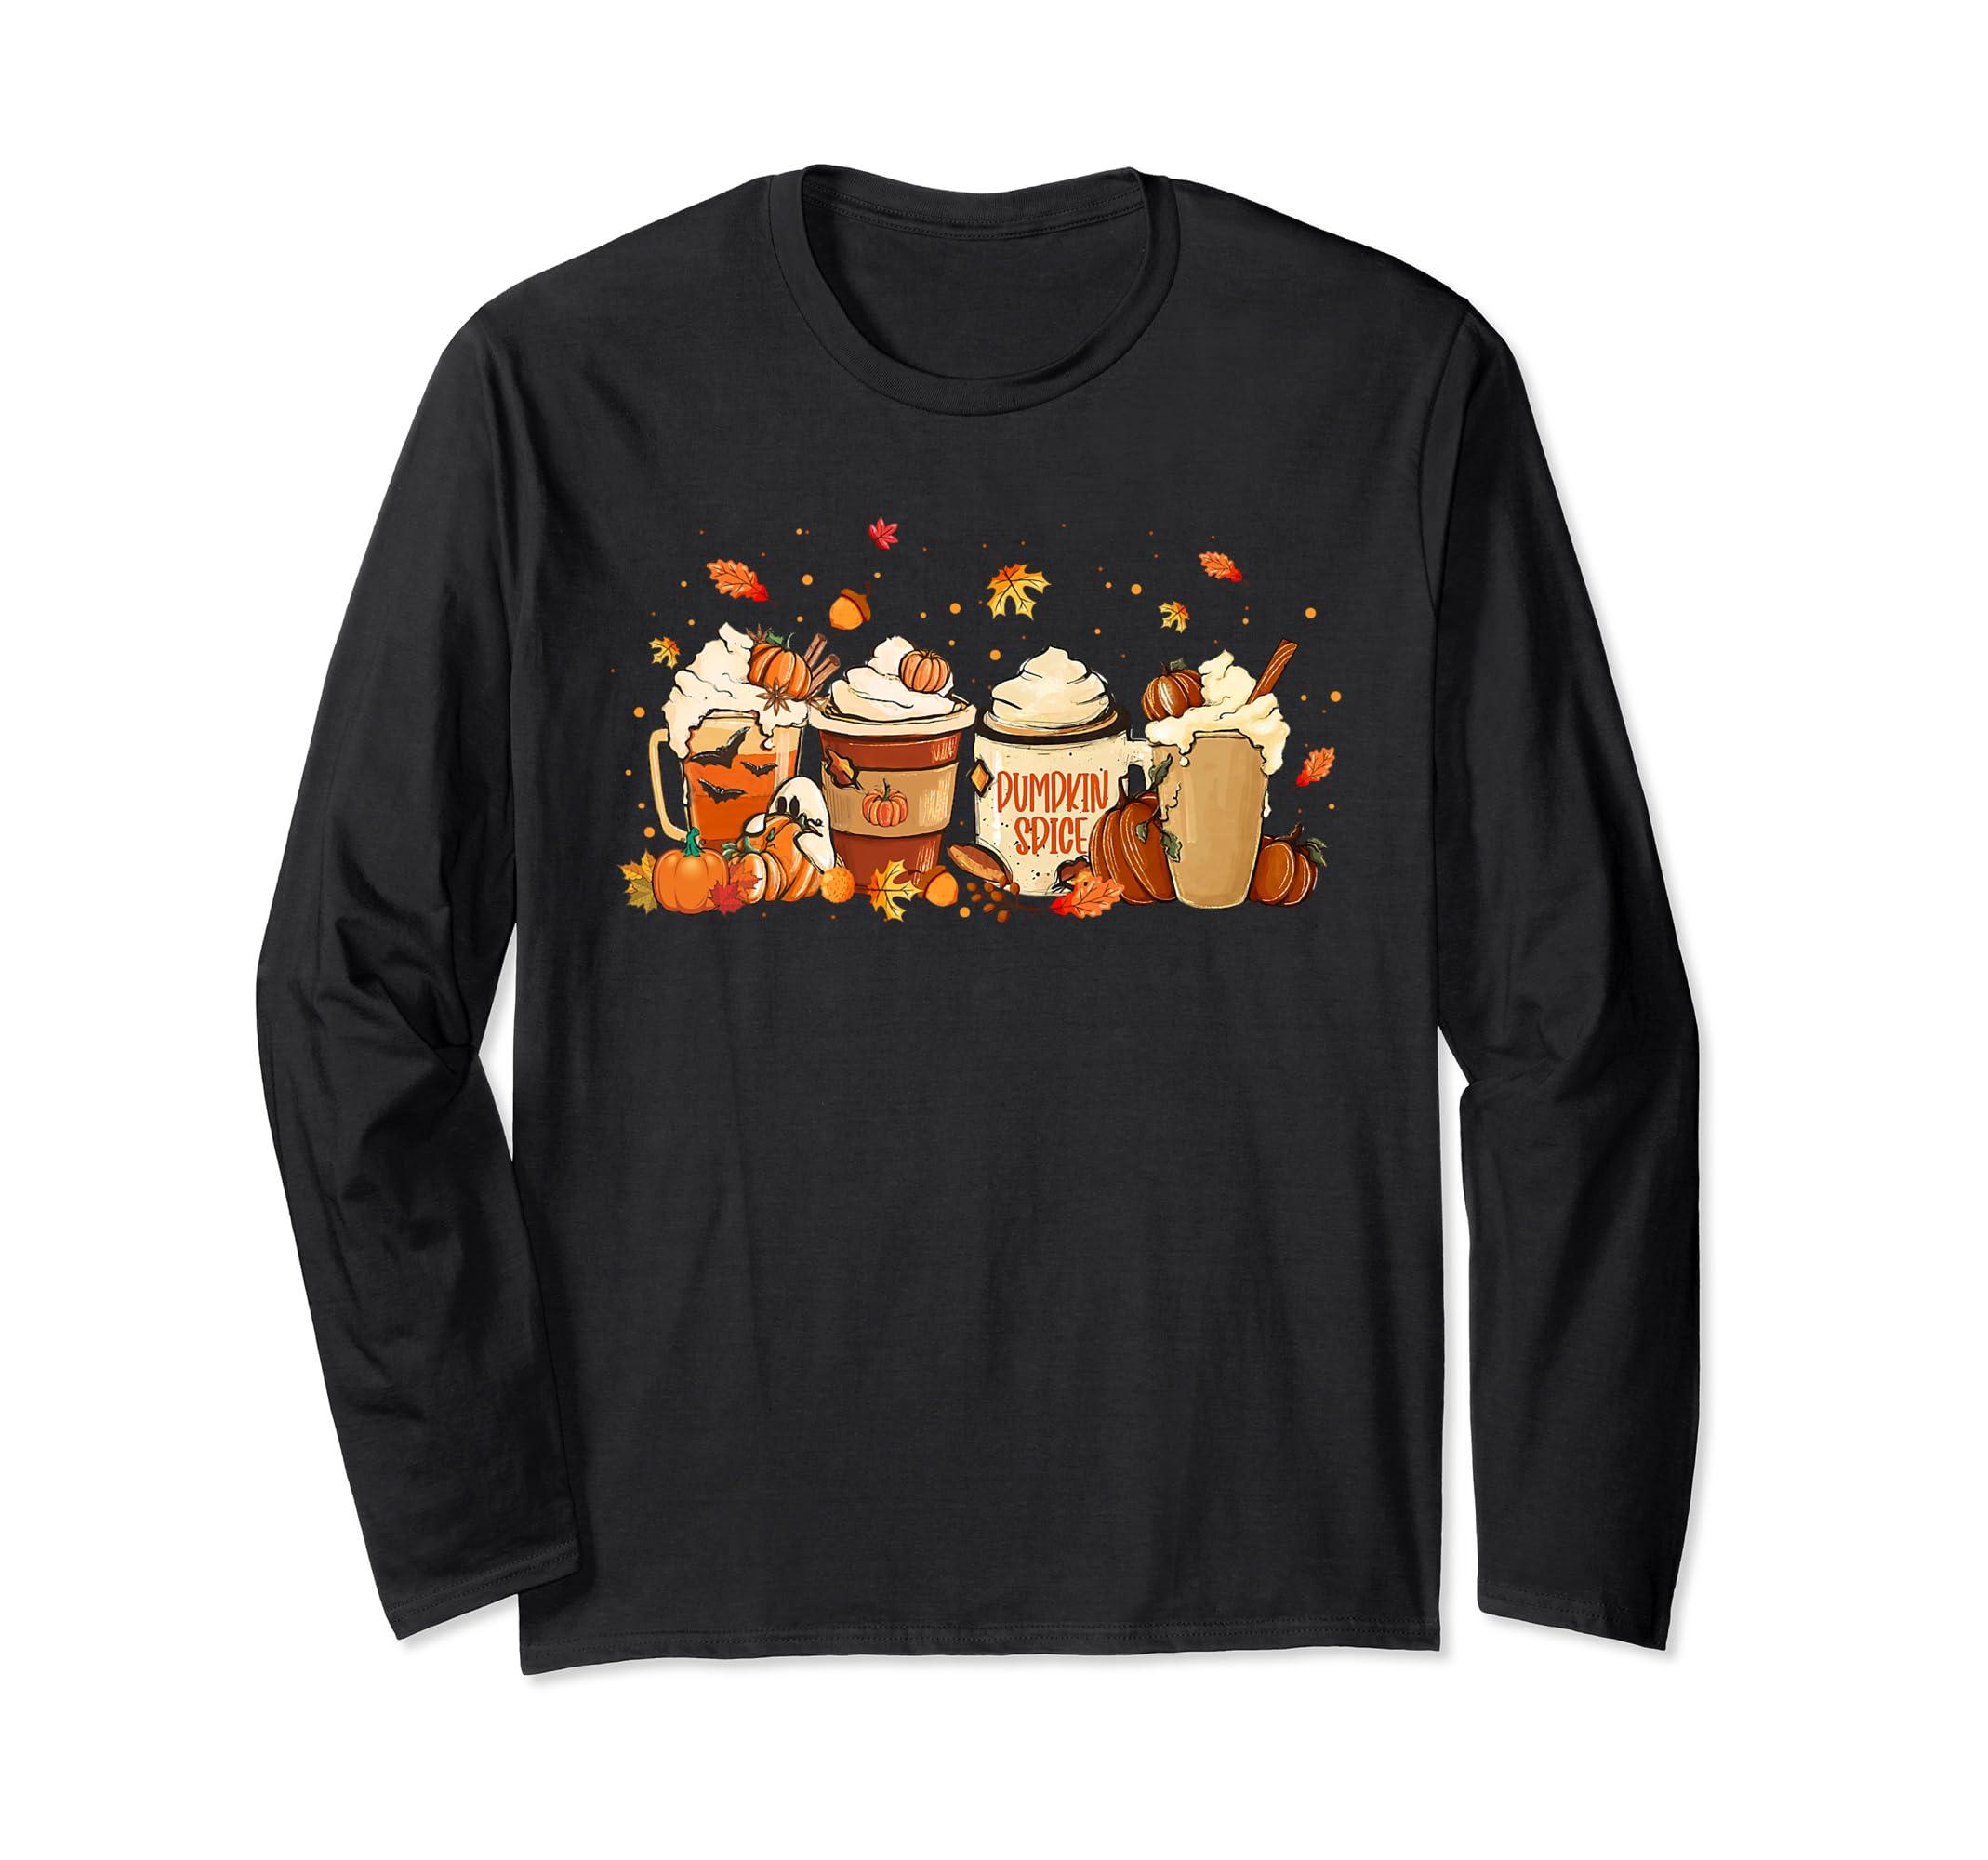 Tis The Season Pumpkin Leaf Latte Fall Thanksgiving Football Sweatshirt